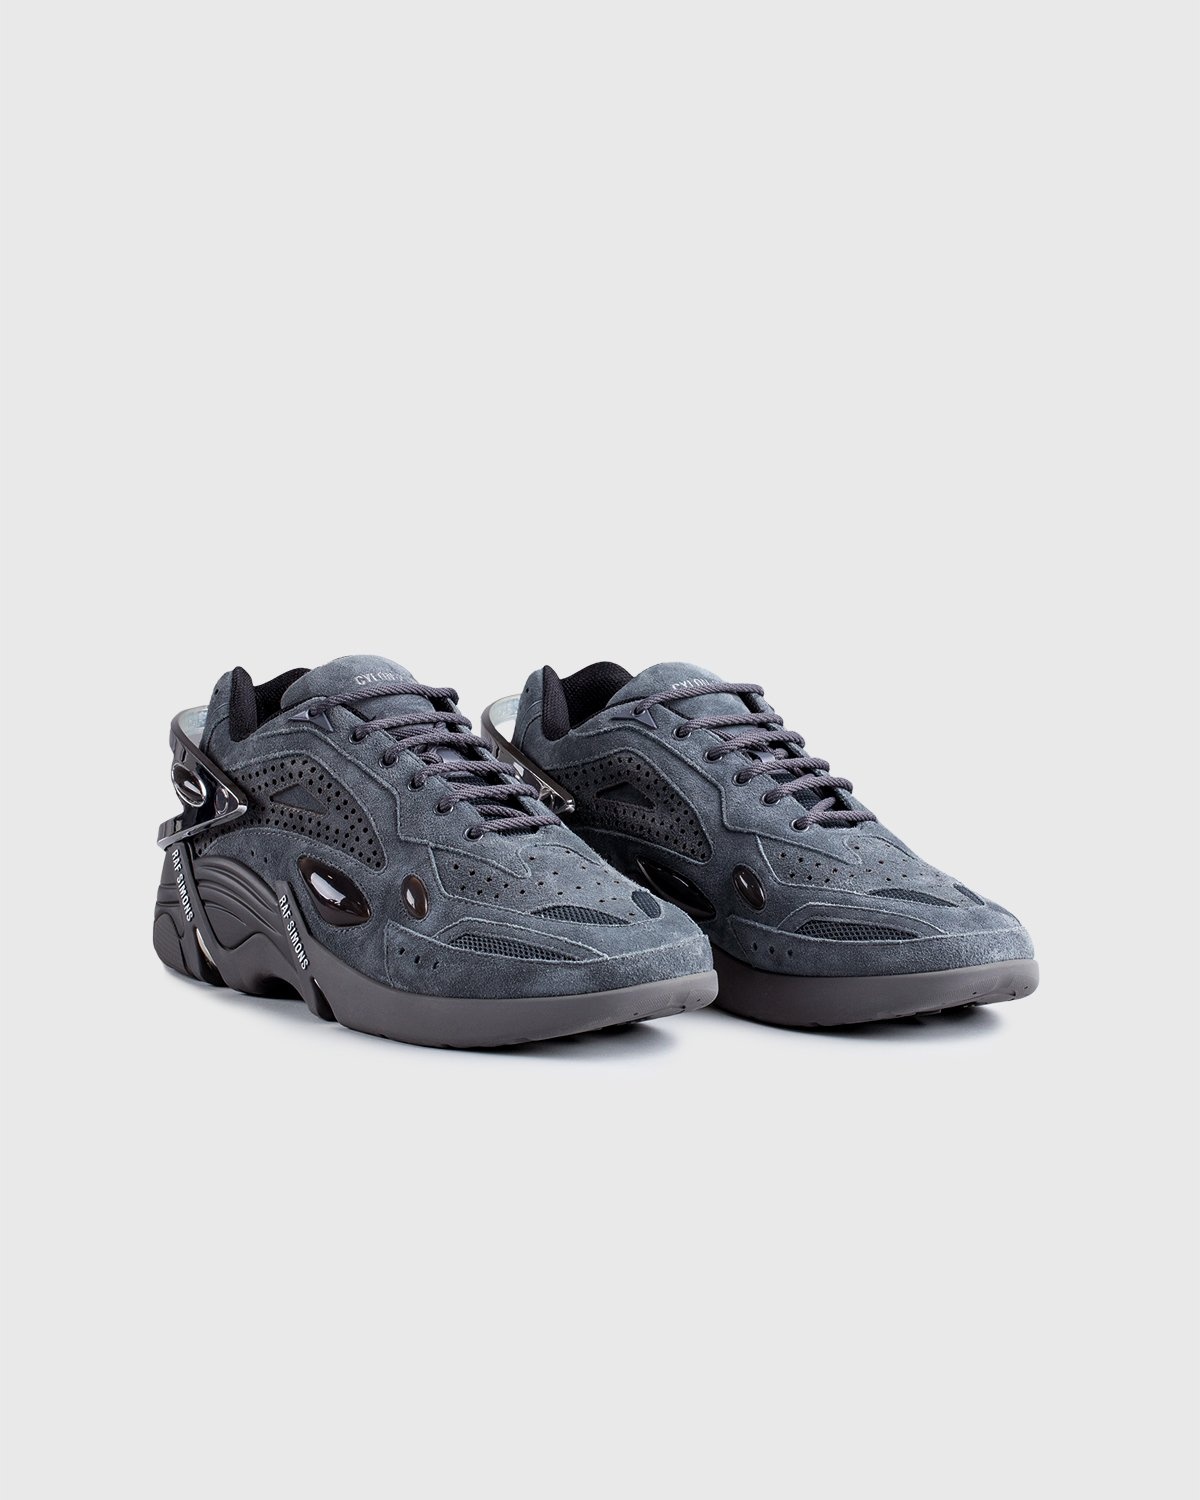 Raf Simons – Cylon Grey - Low Top Sneakers - Grey - Image 3